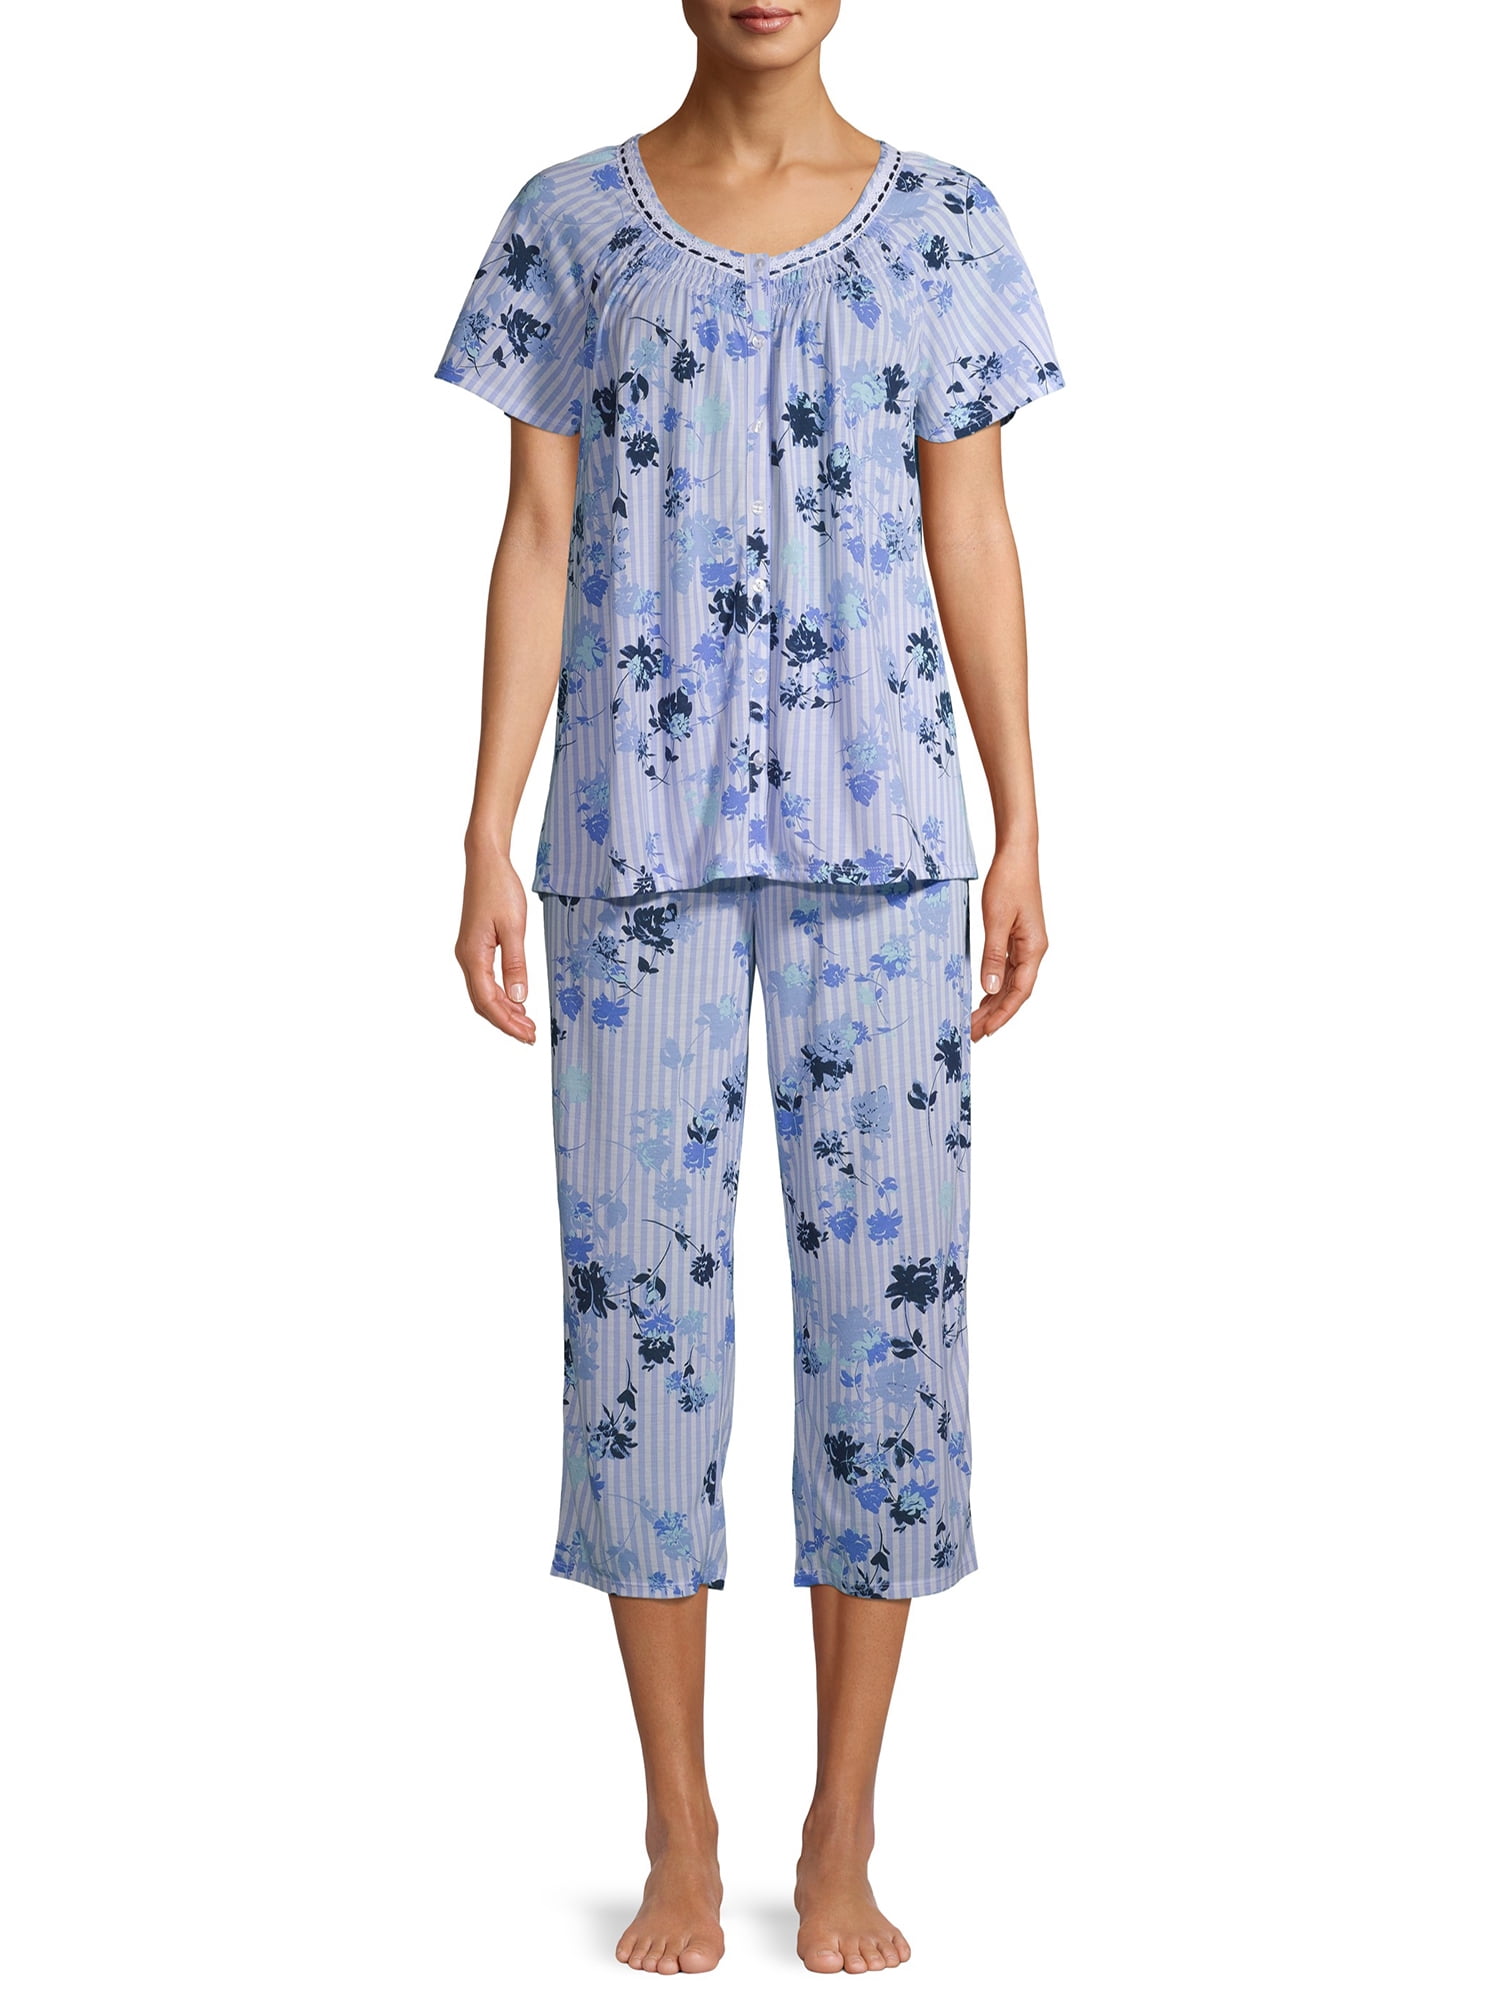 Women's Pajama Short Sets Canada : Women's Short Pajama Set | Elecrisric